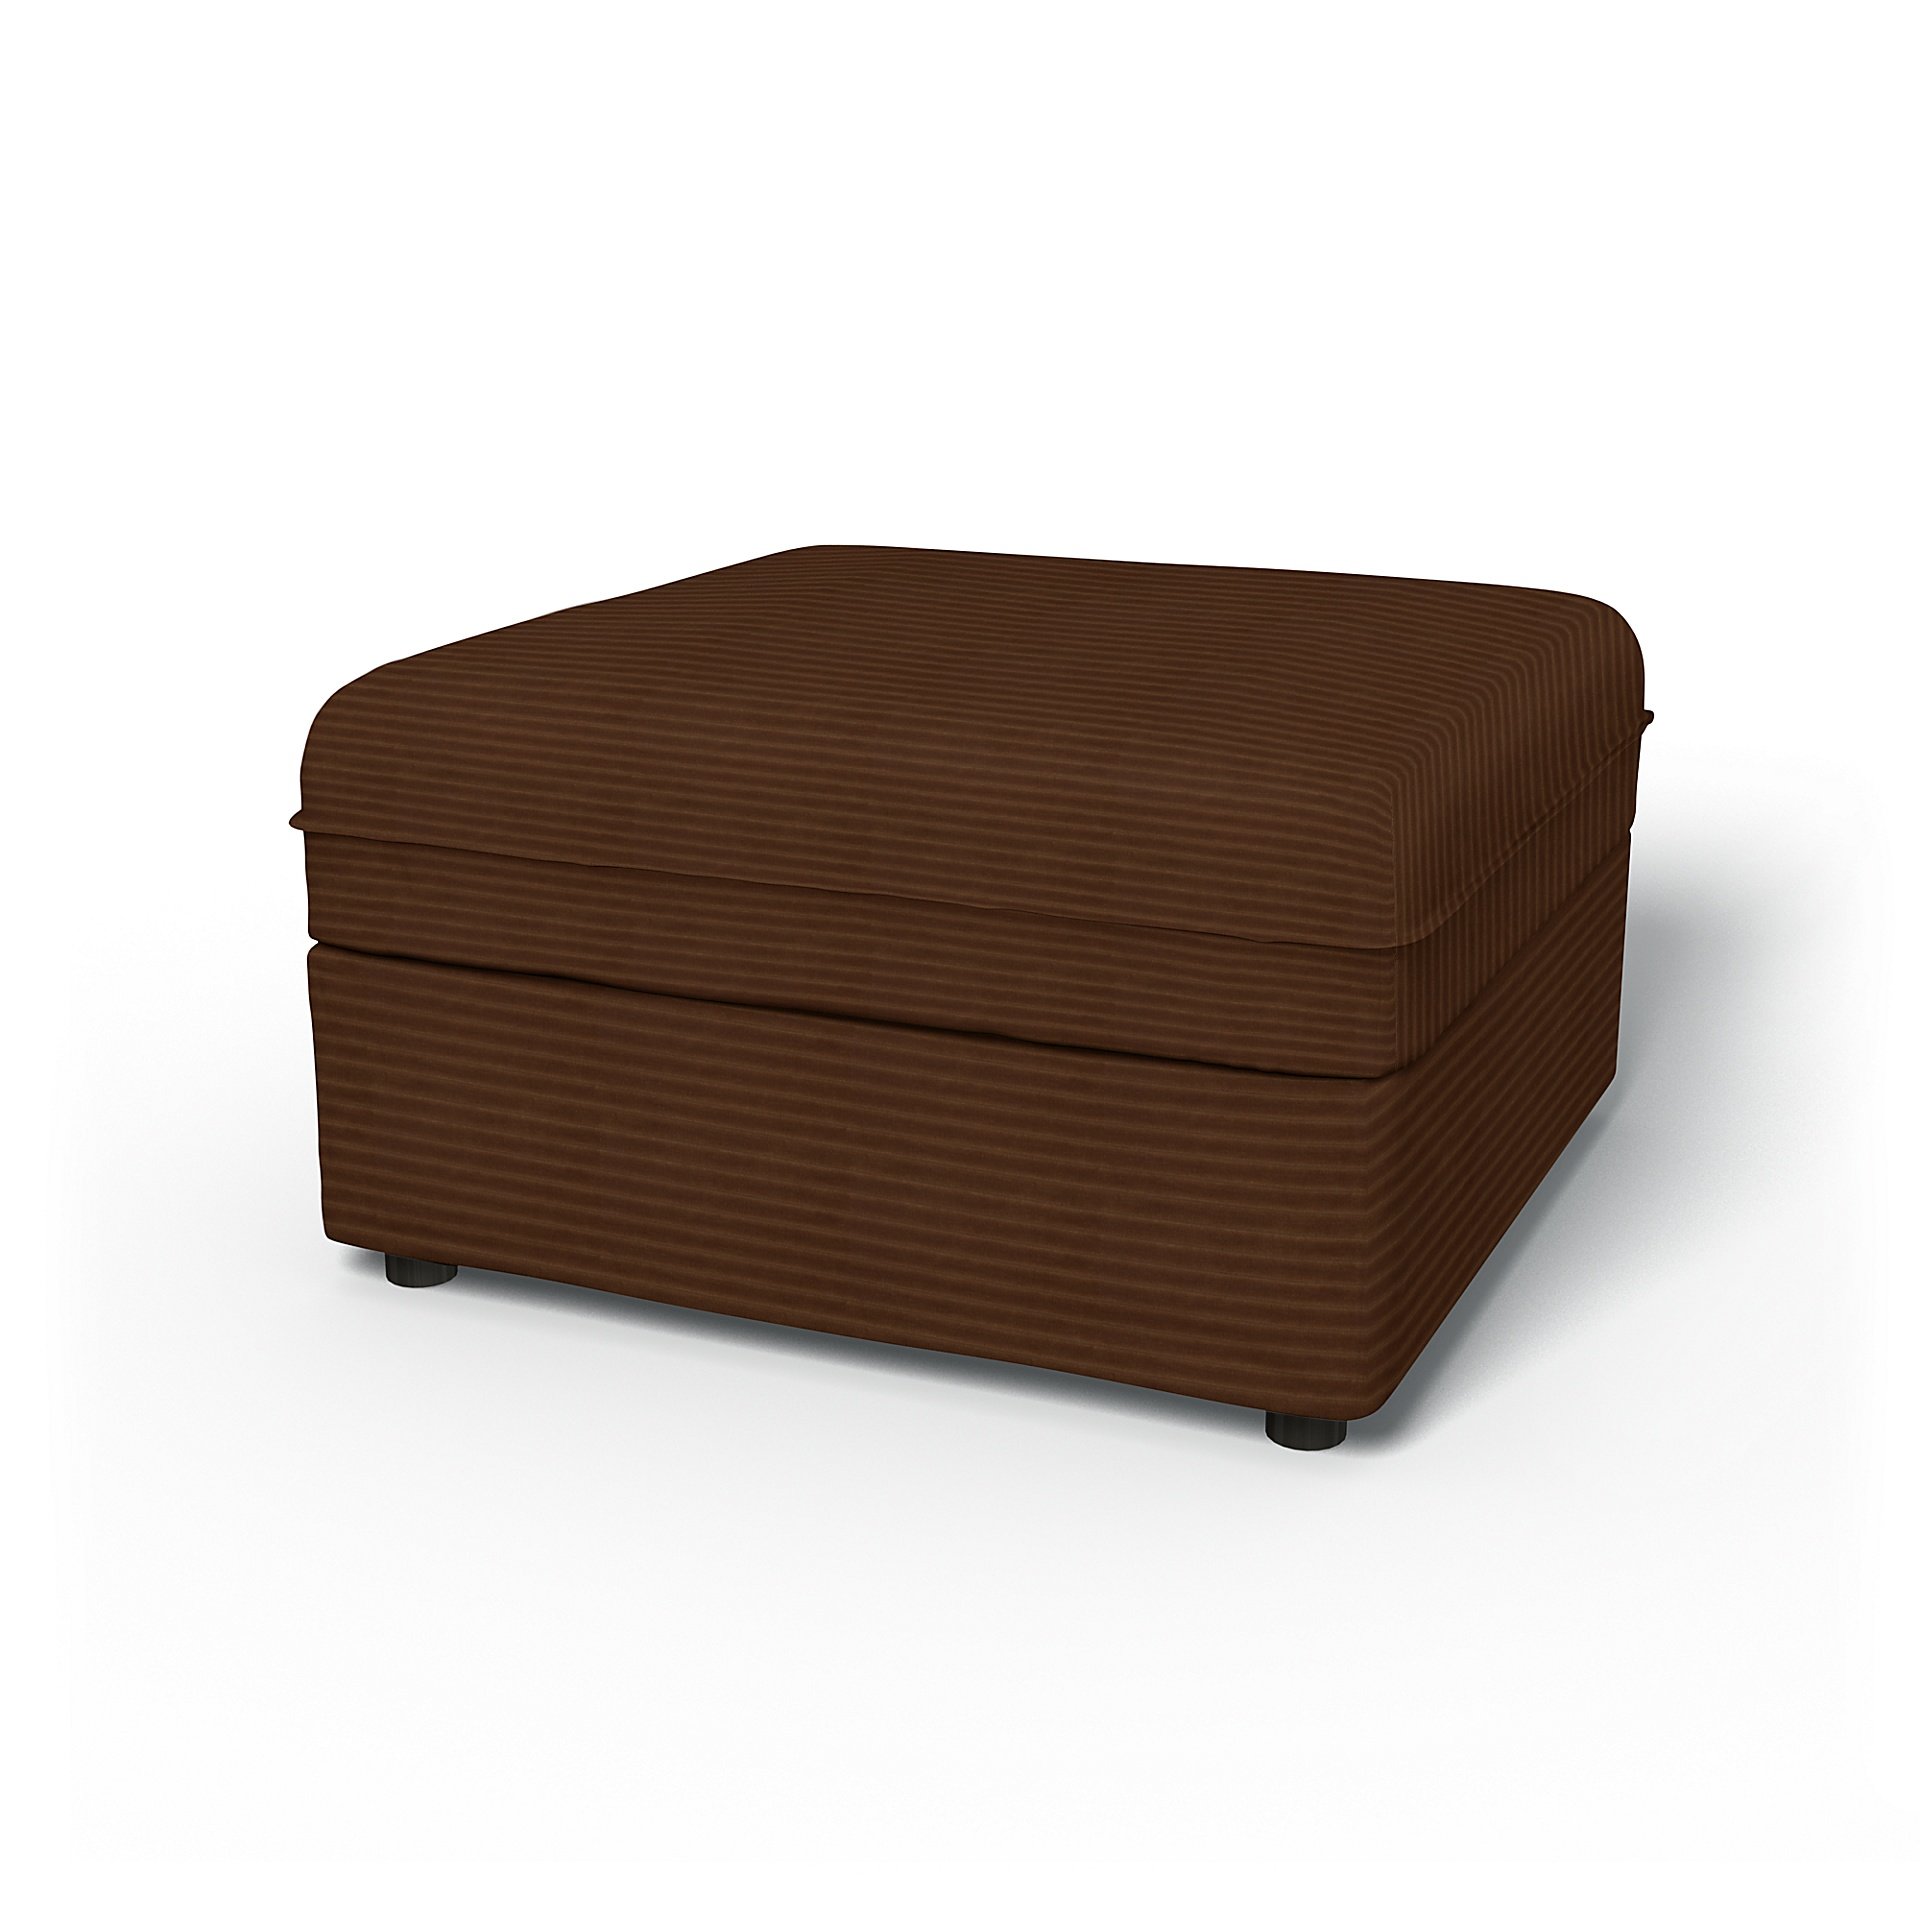 IKEA - Vallentuna Seat Module with Storage Cover 80x80cm 32x32in, Chocolate Brown, Corduroy - Bemz